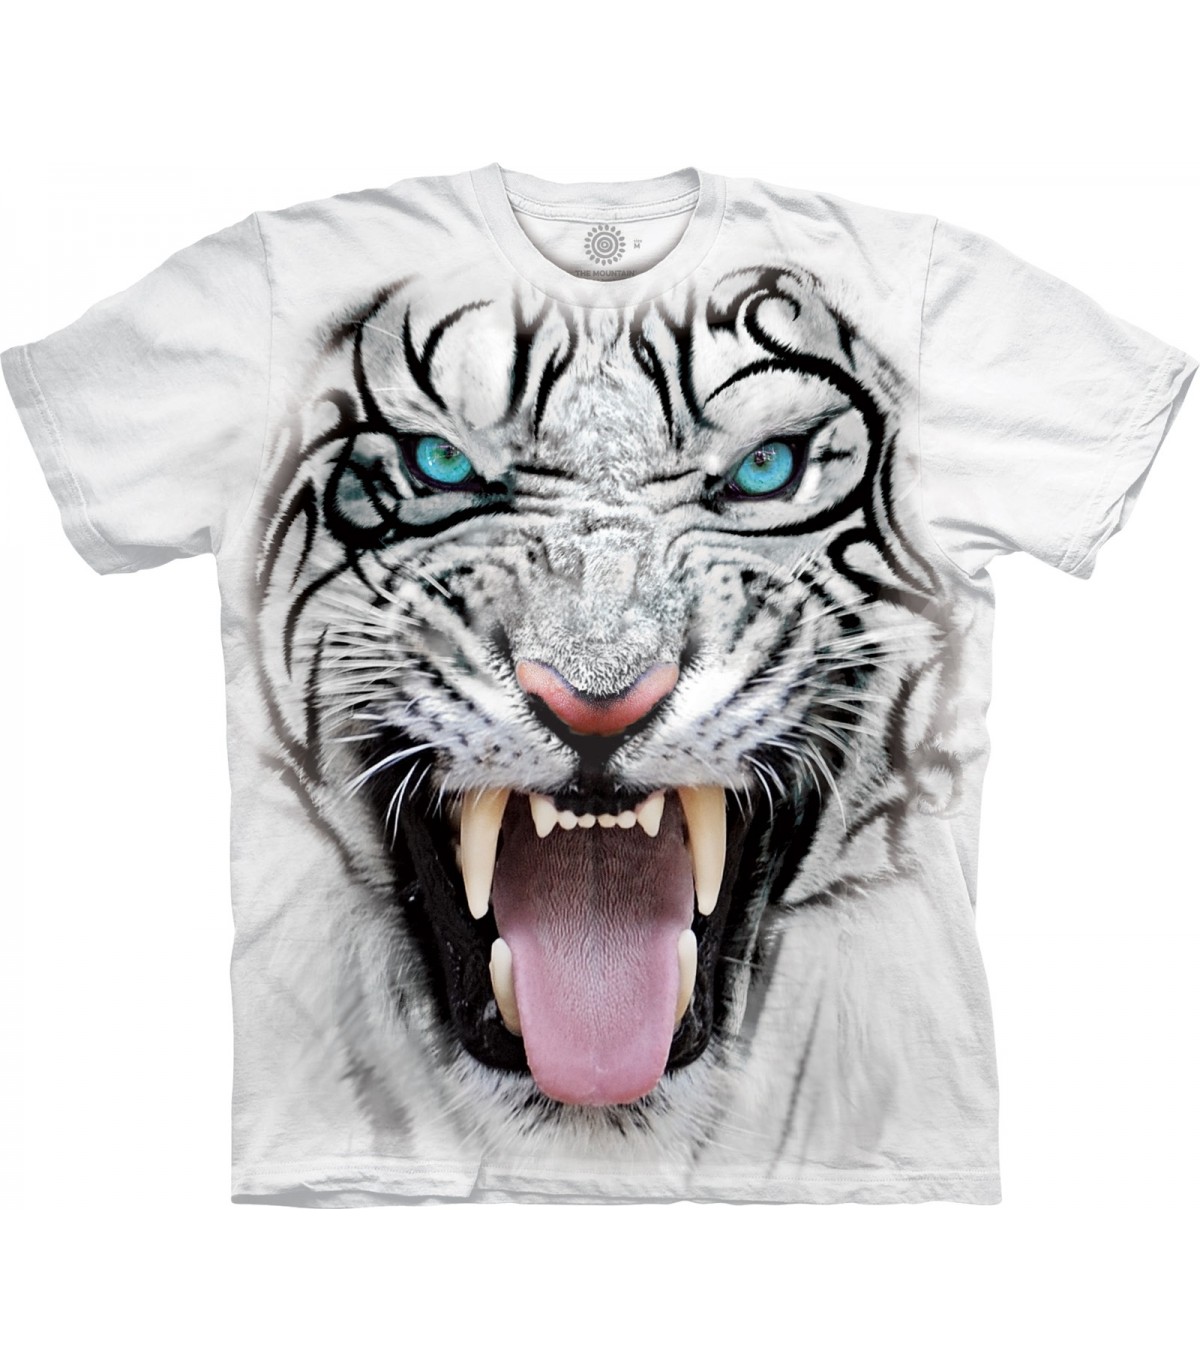 white tiger t shirt